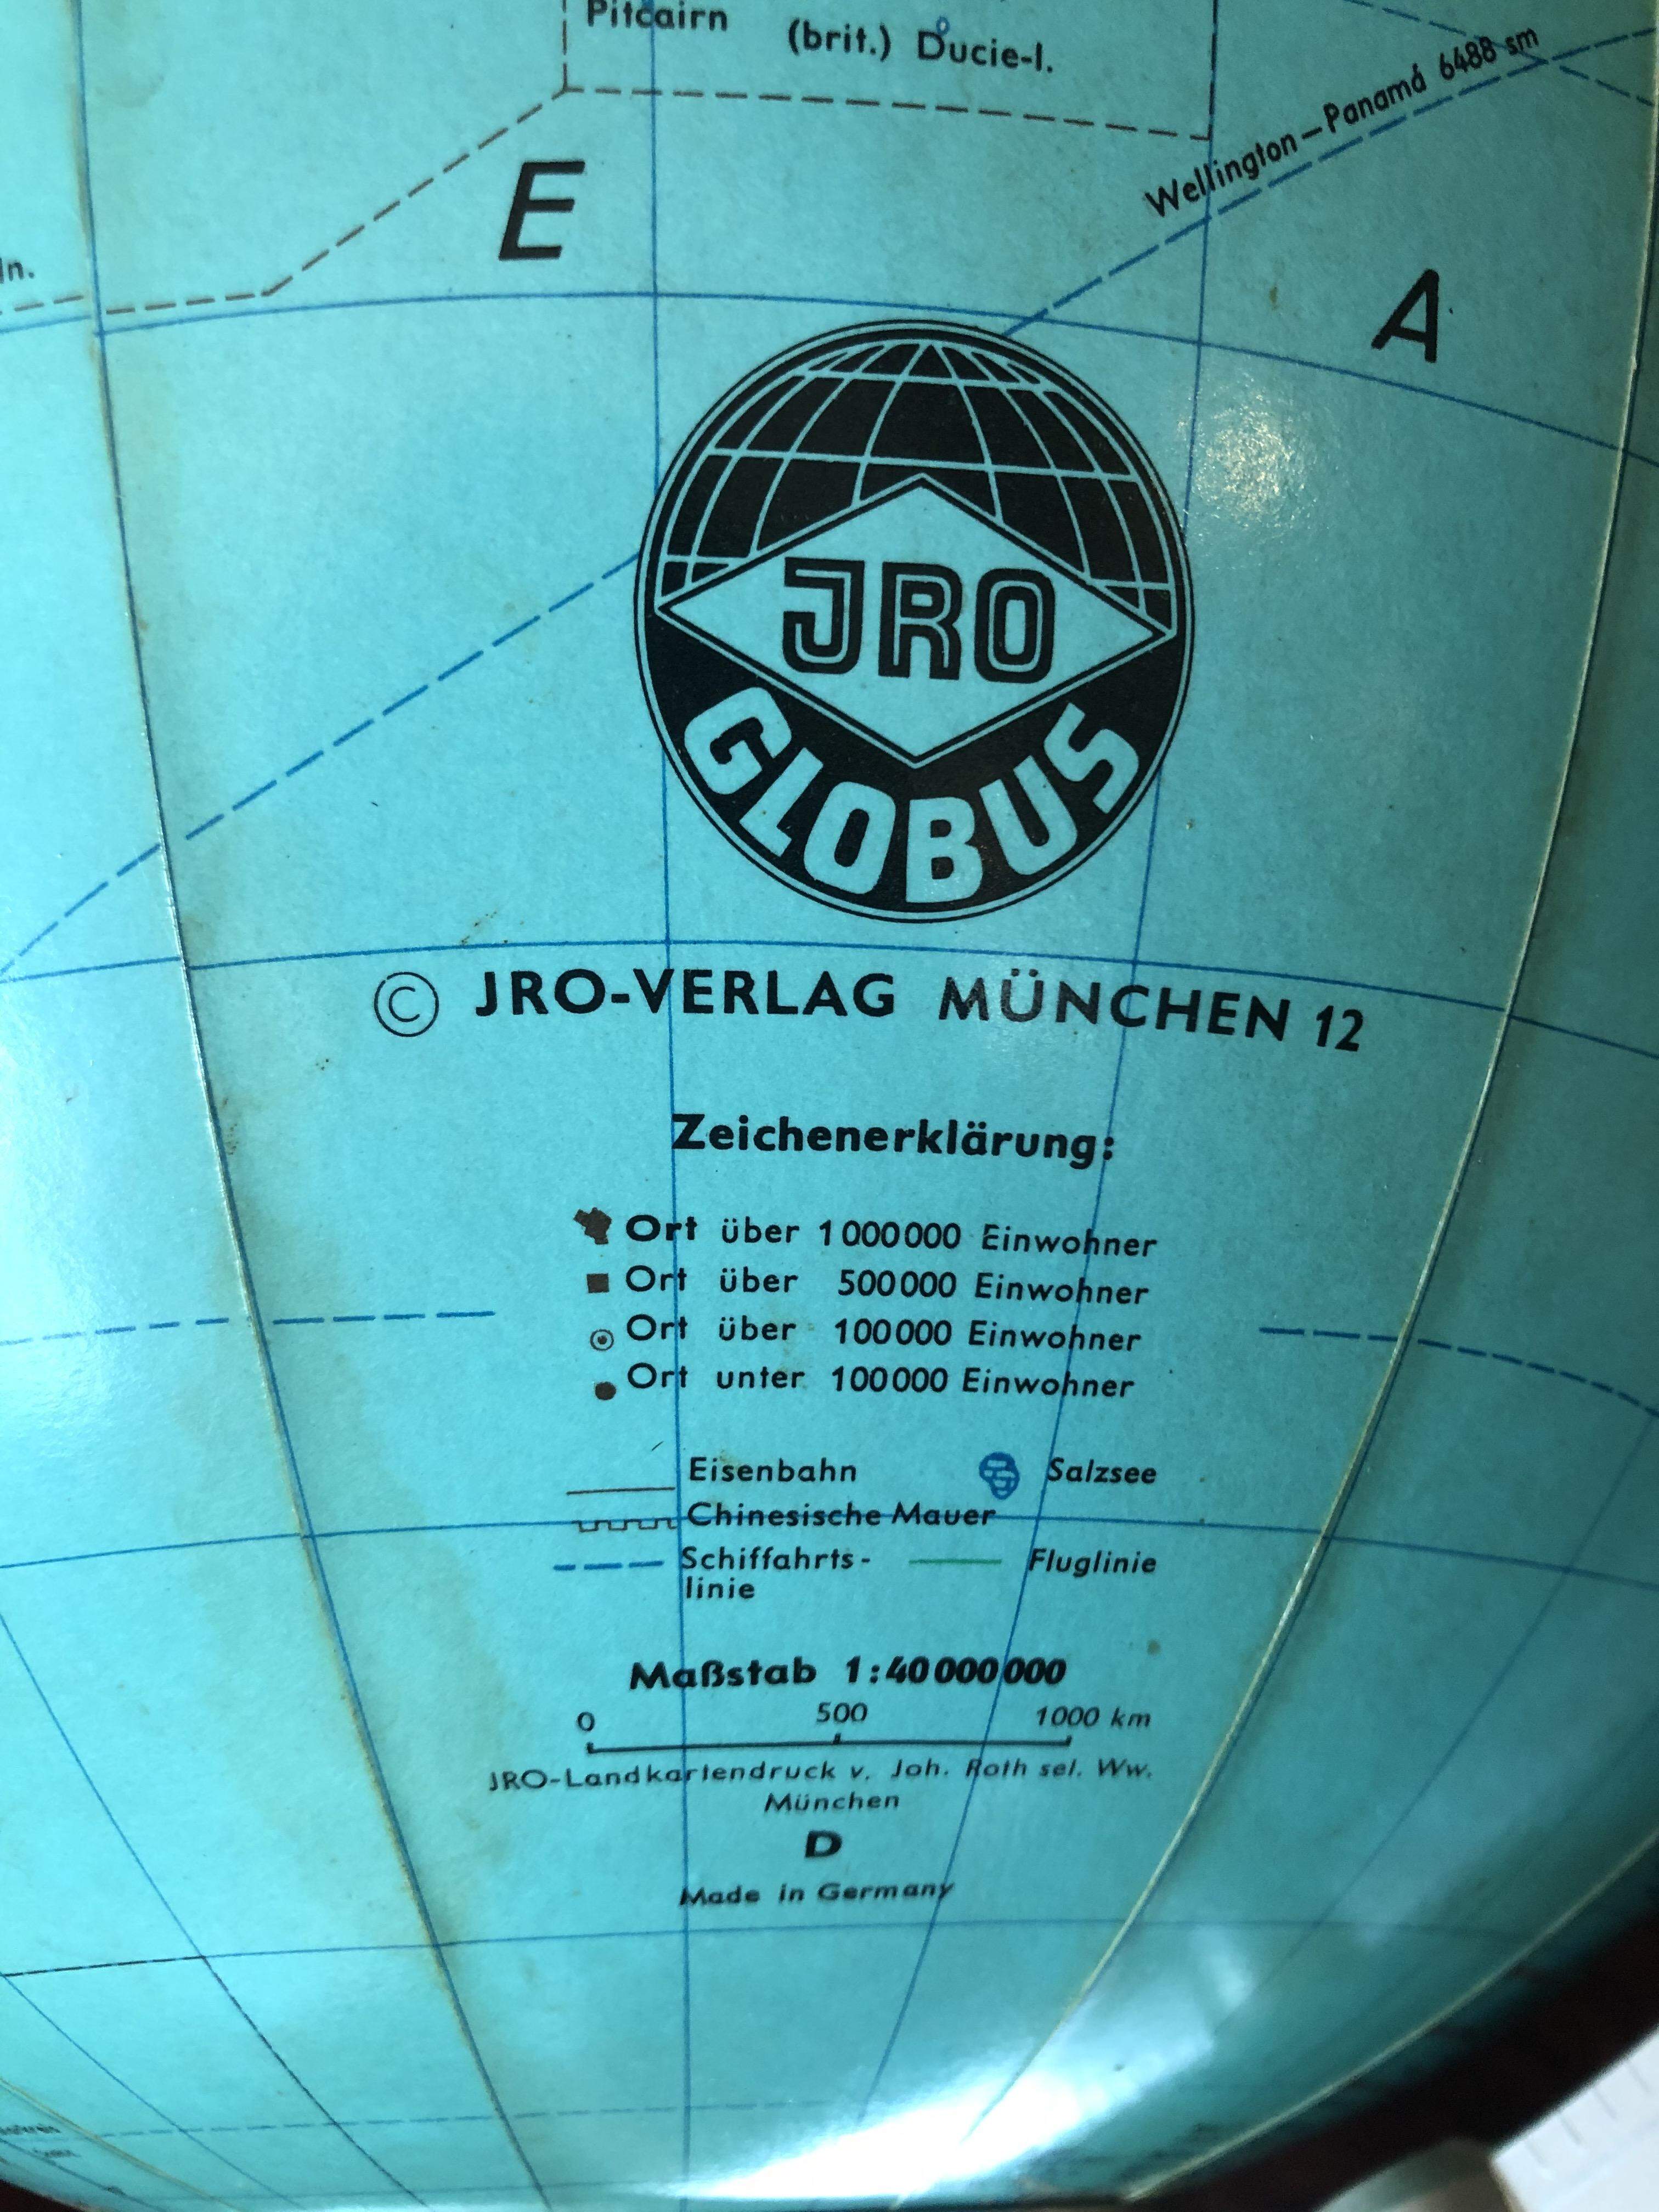 Globus JRO München, beleuchtet